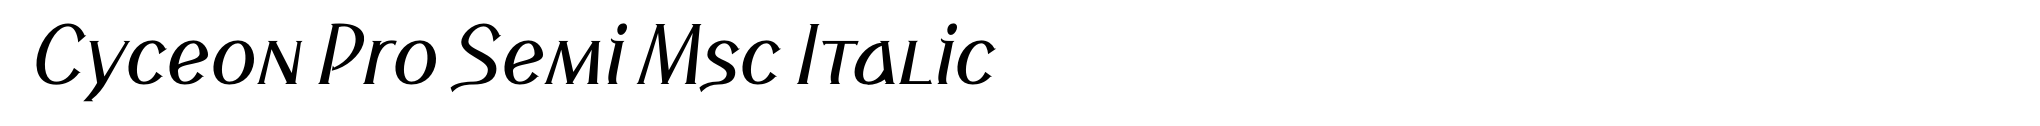 Cyceon Pro Semi Msc Italic image